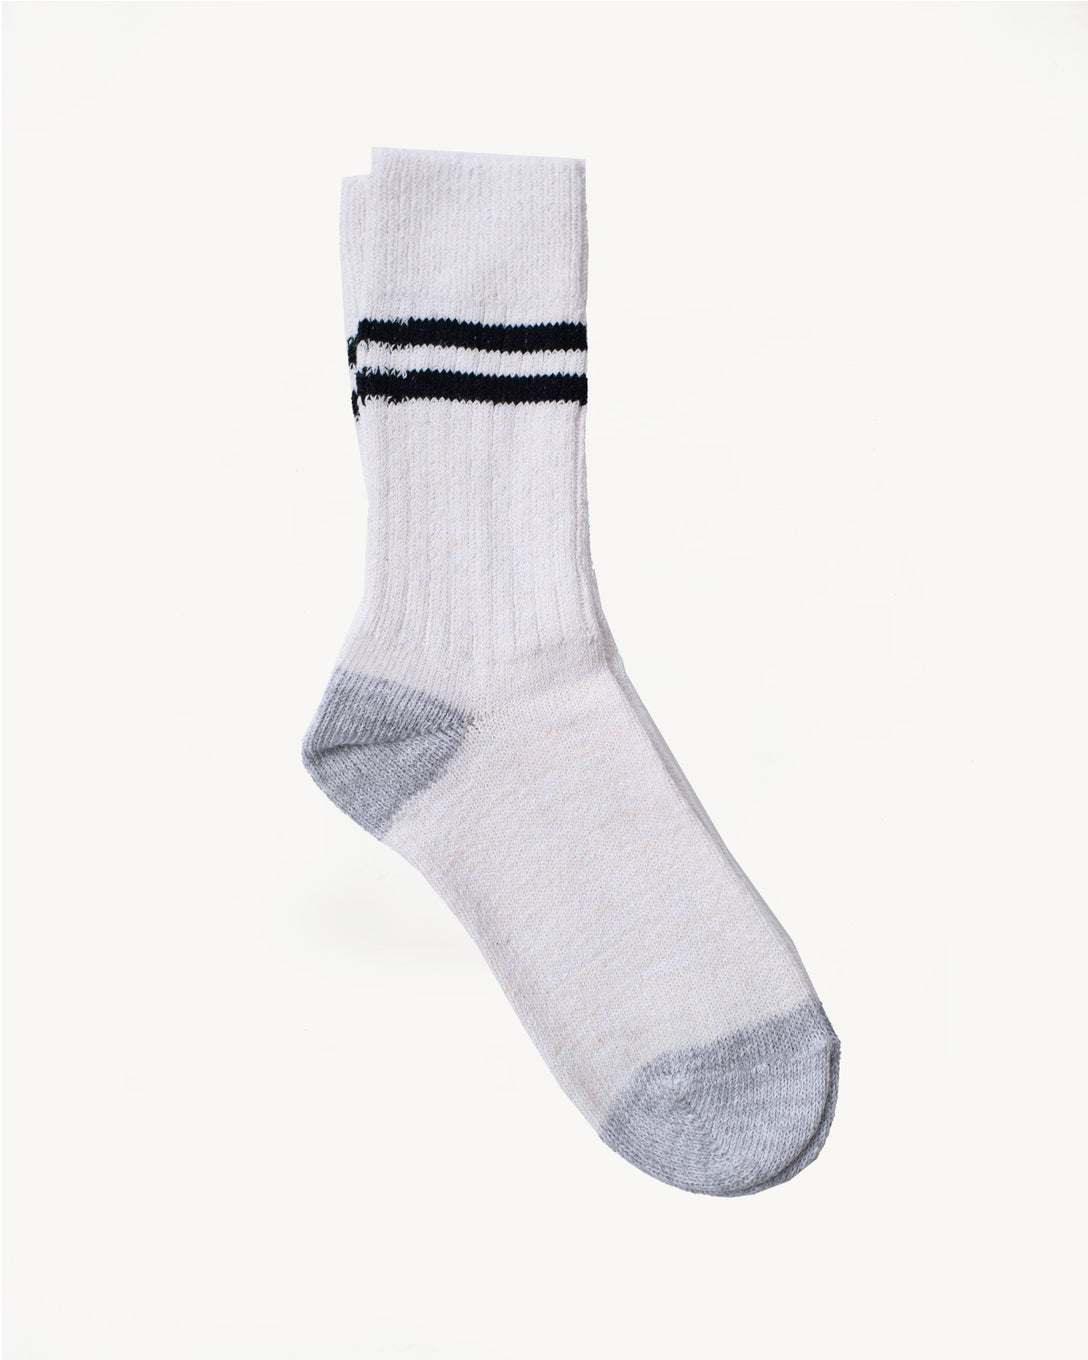 GS05.0299 - Striped Sock - Nature, Black